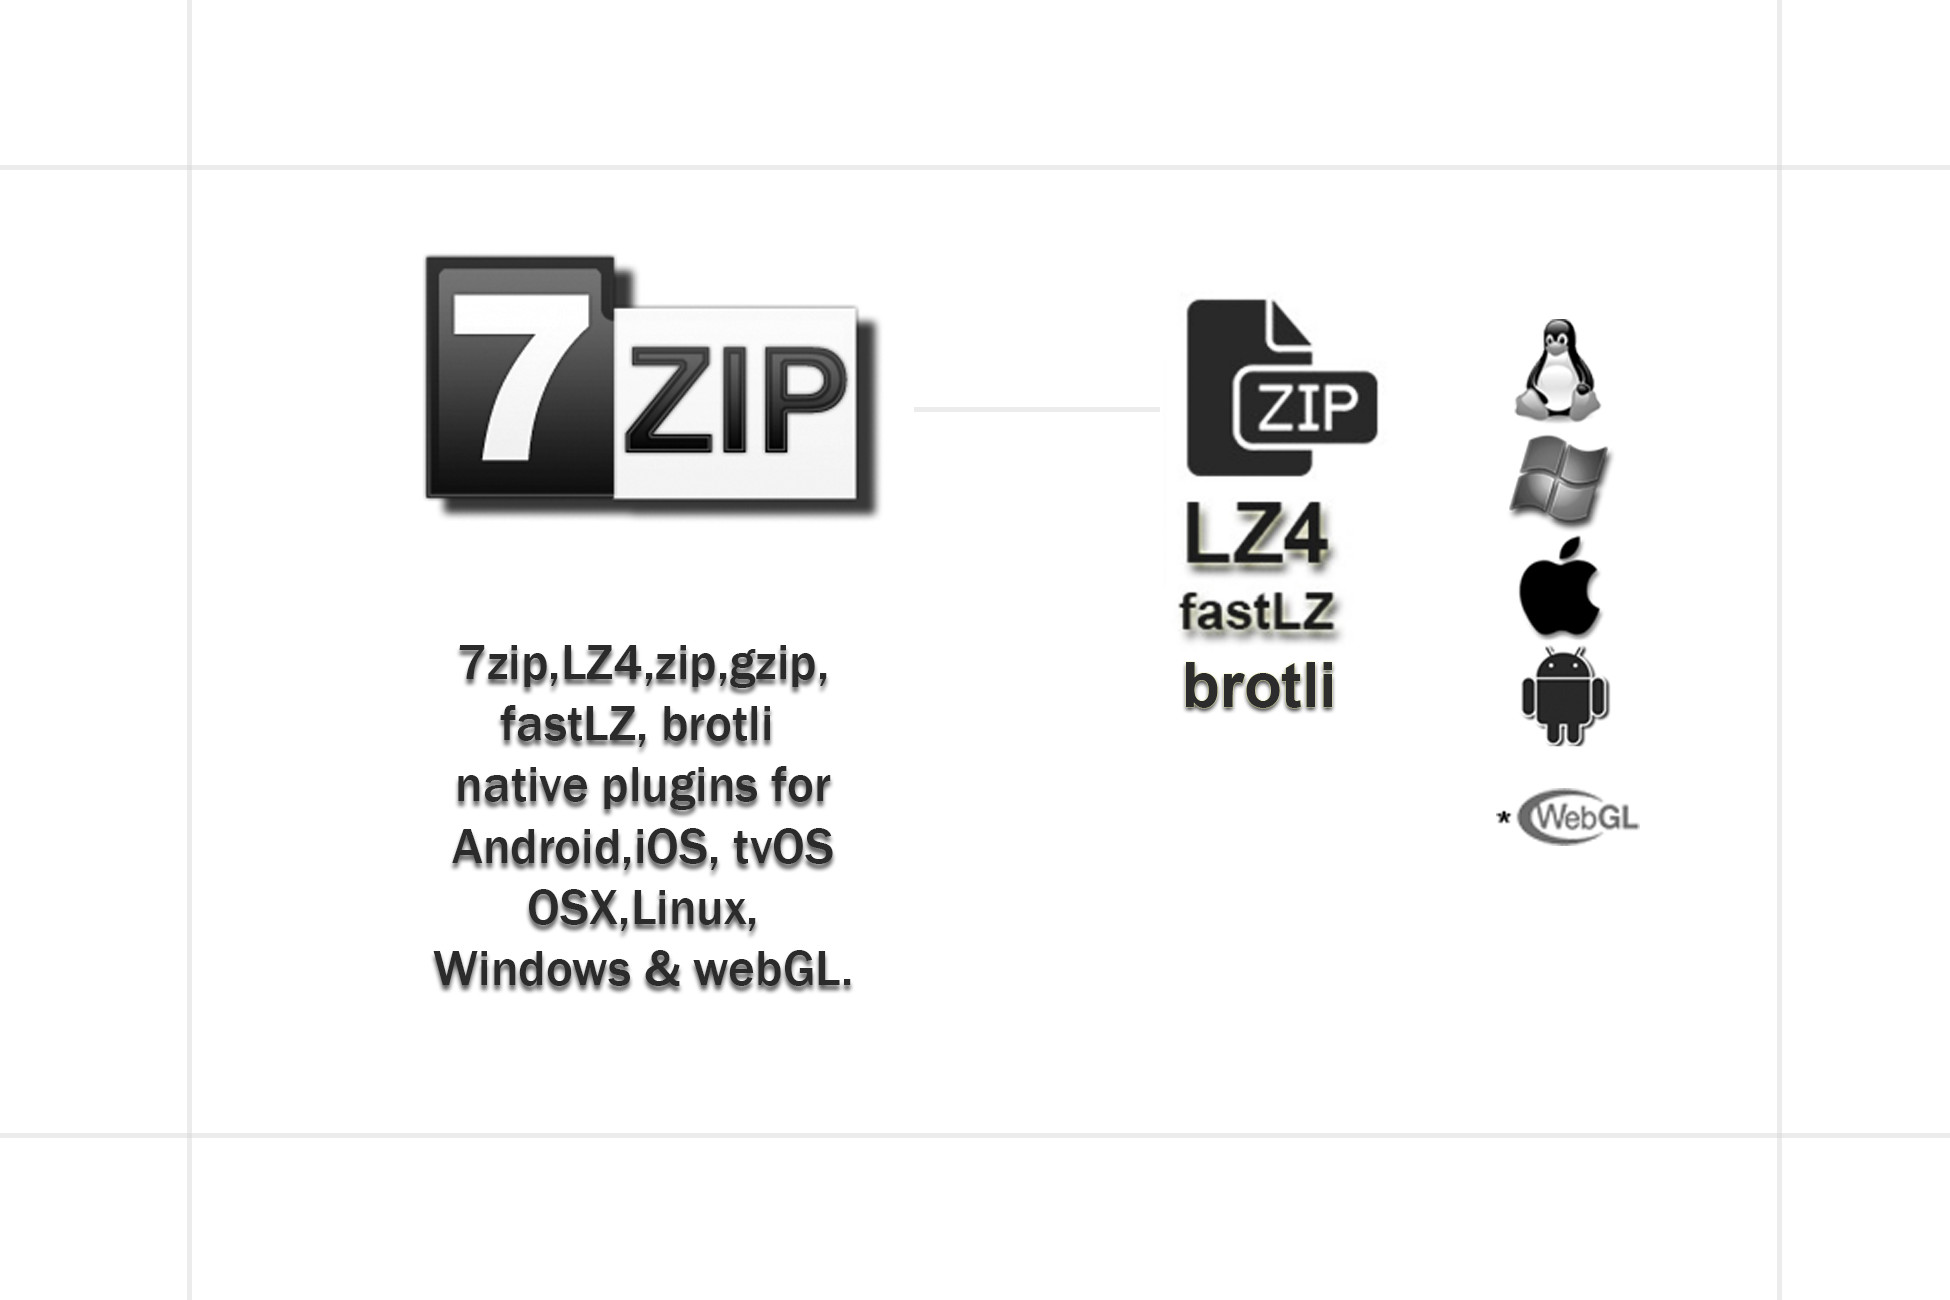 Mac Os X 7zip Download